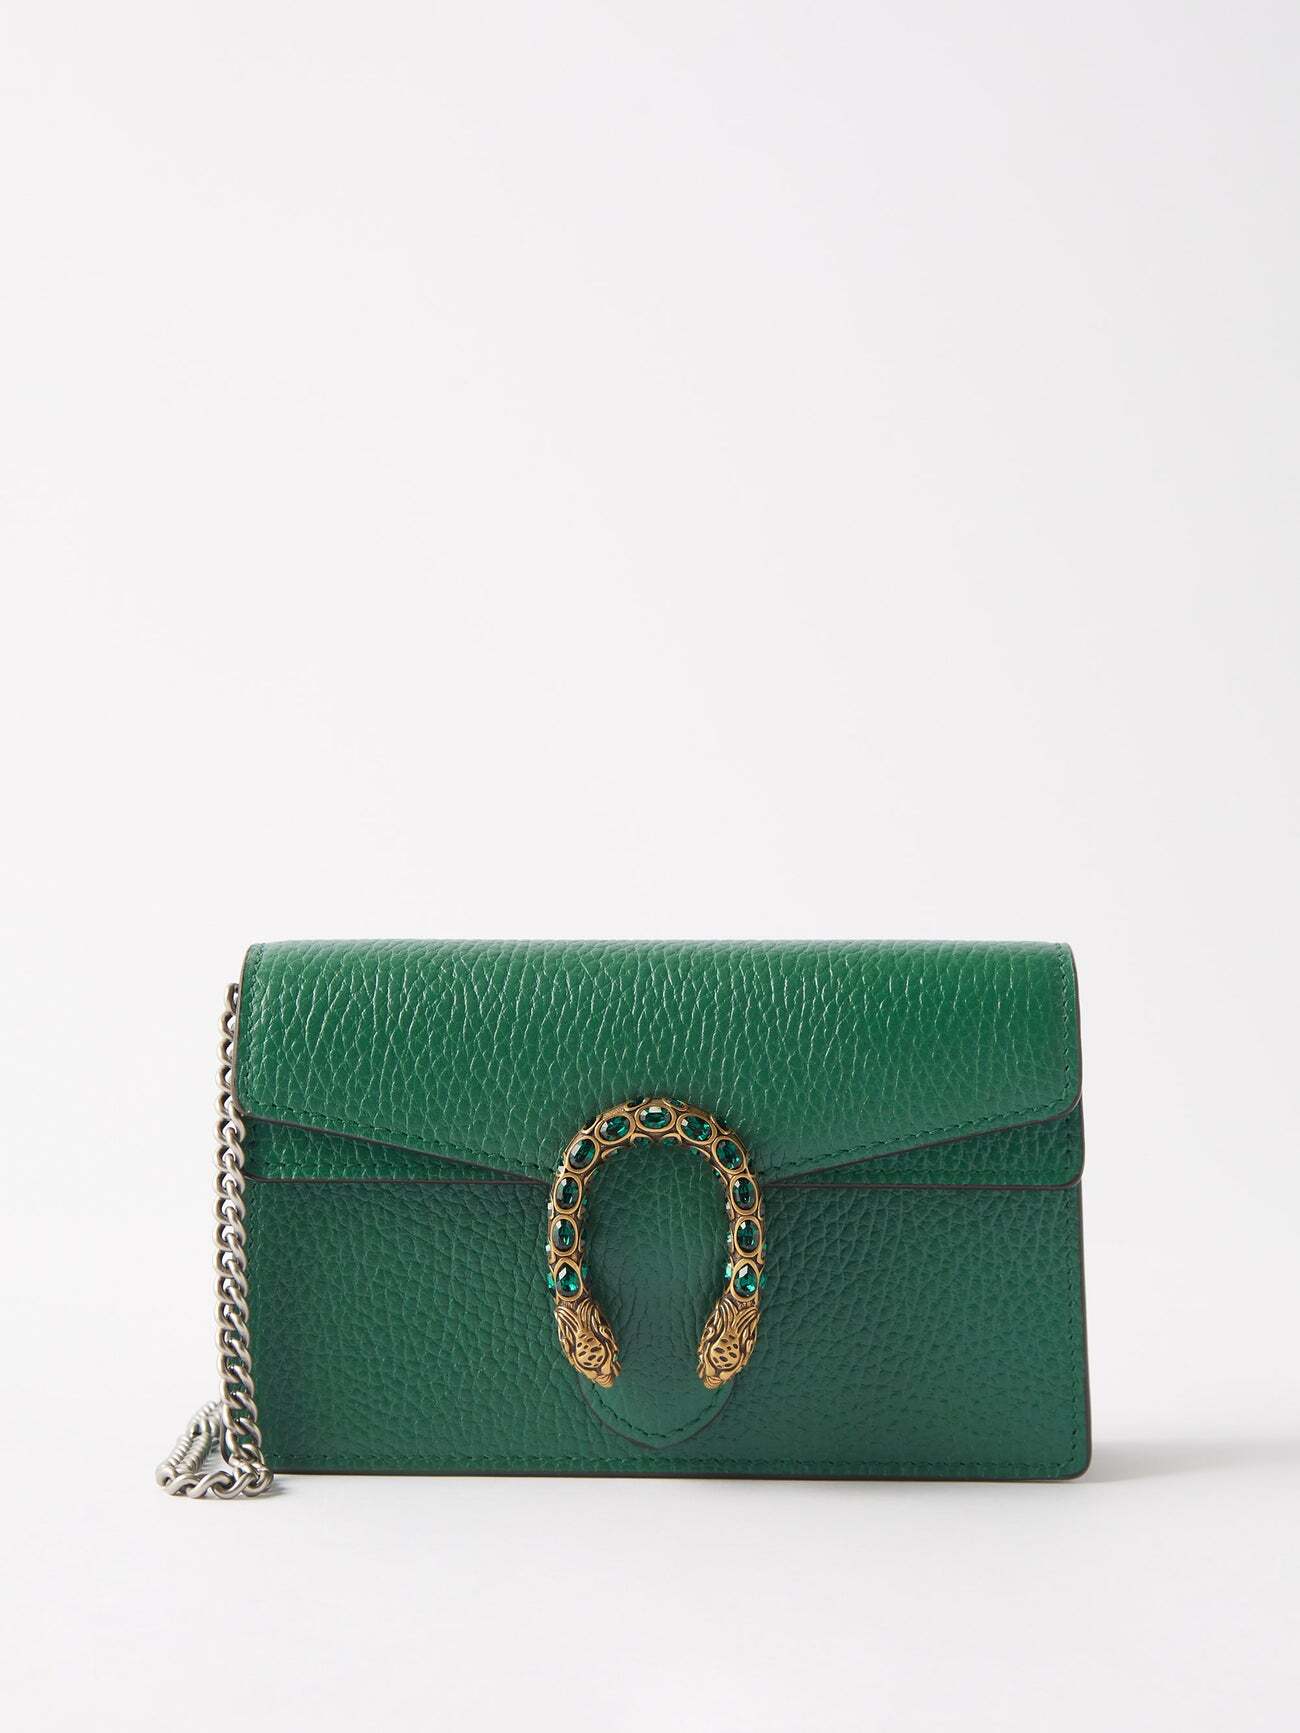 Gucci - Dionysus Super Mini Leather Bag - Womens - Dark Green